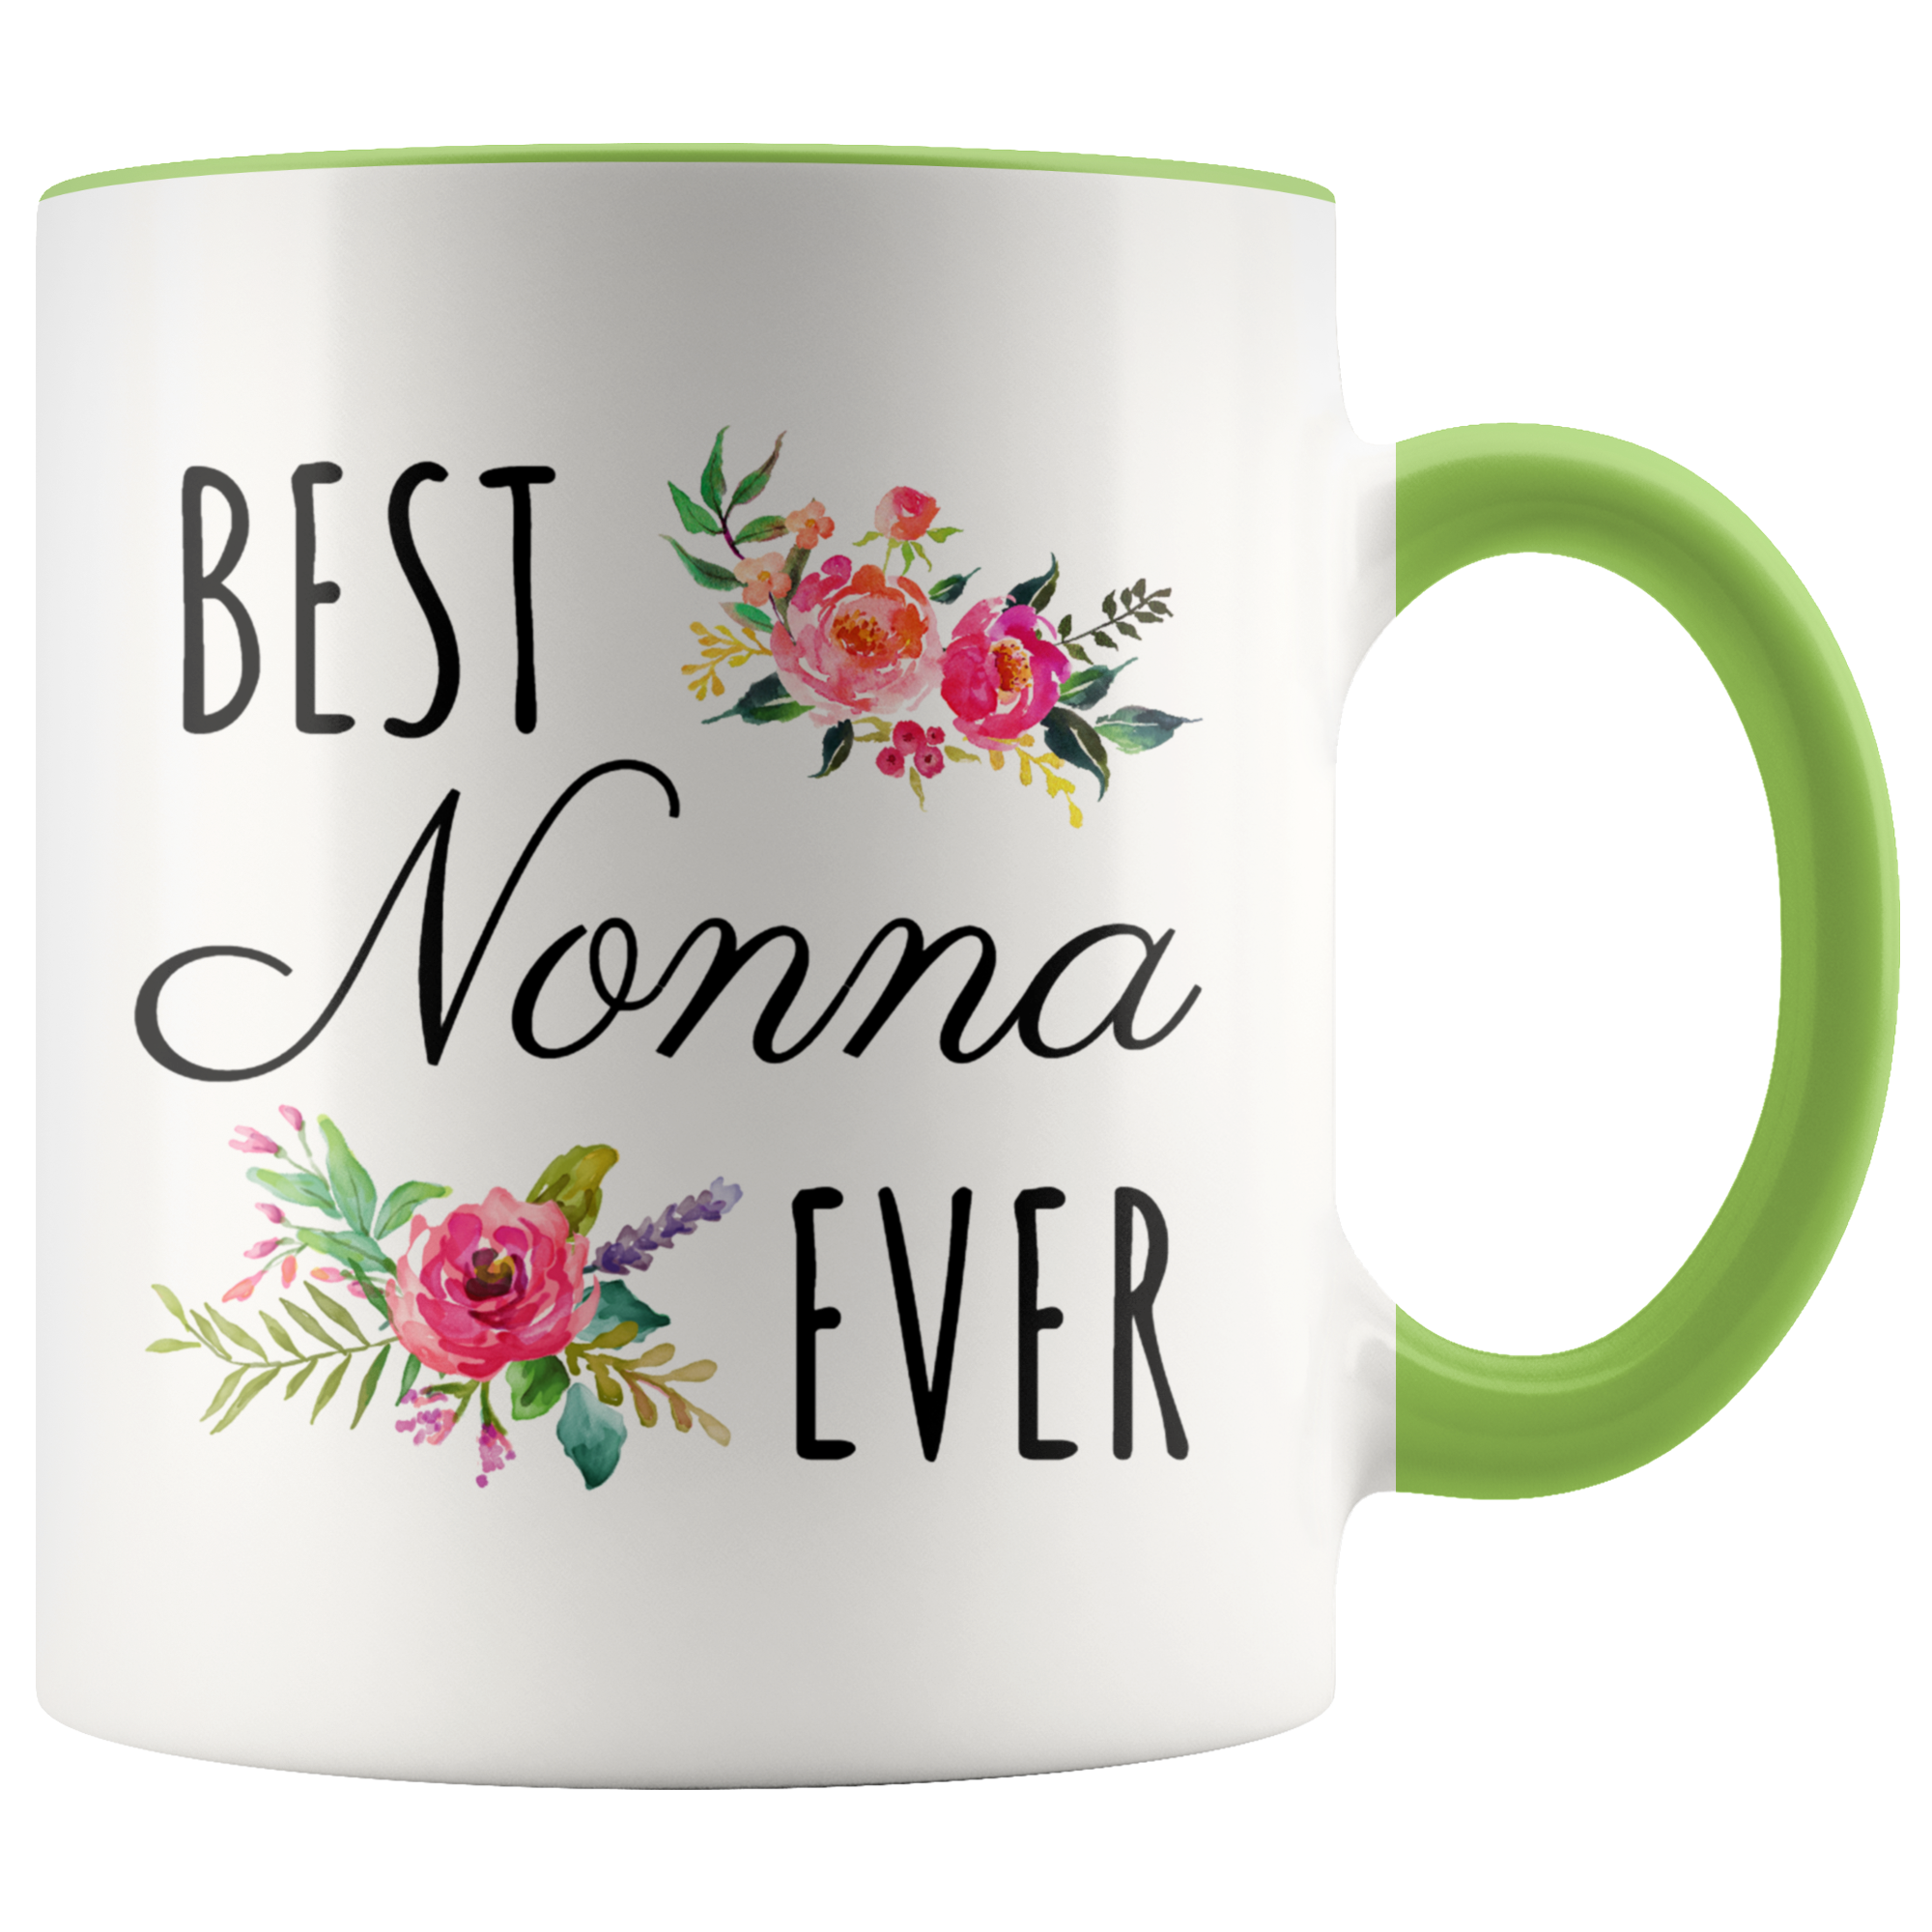 Best Nonna Mug